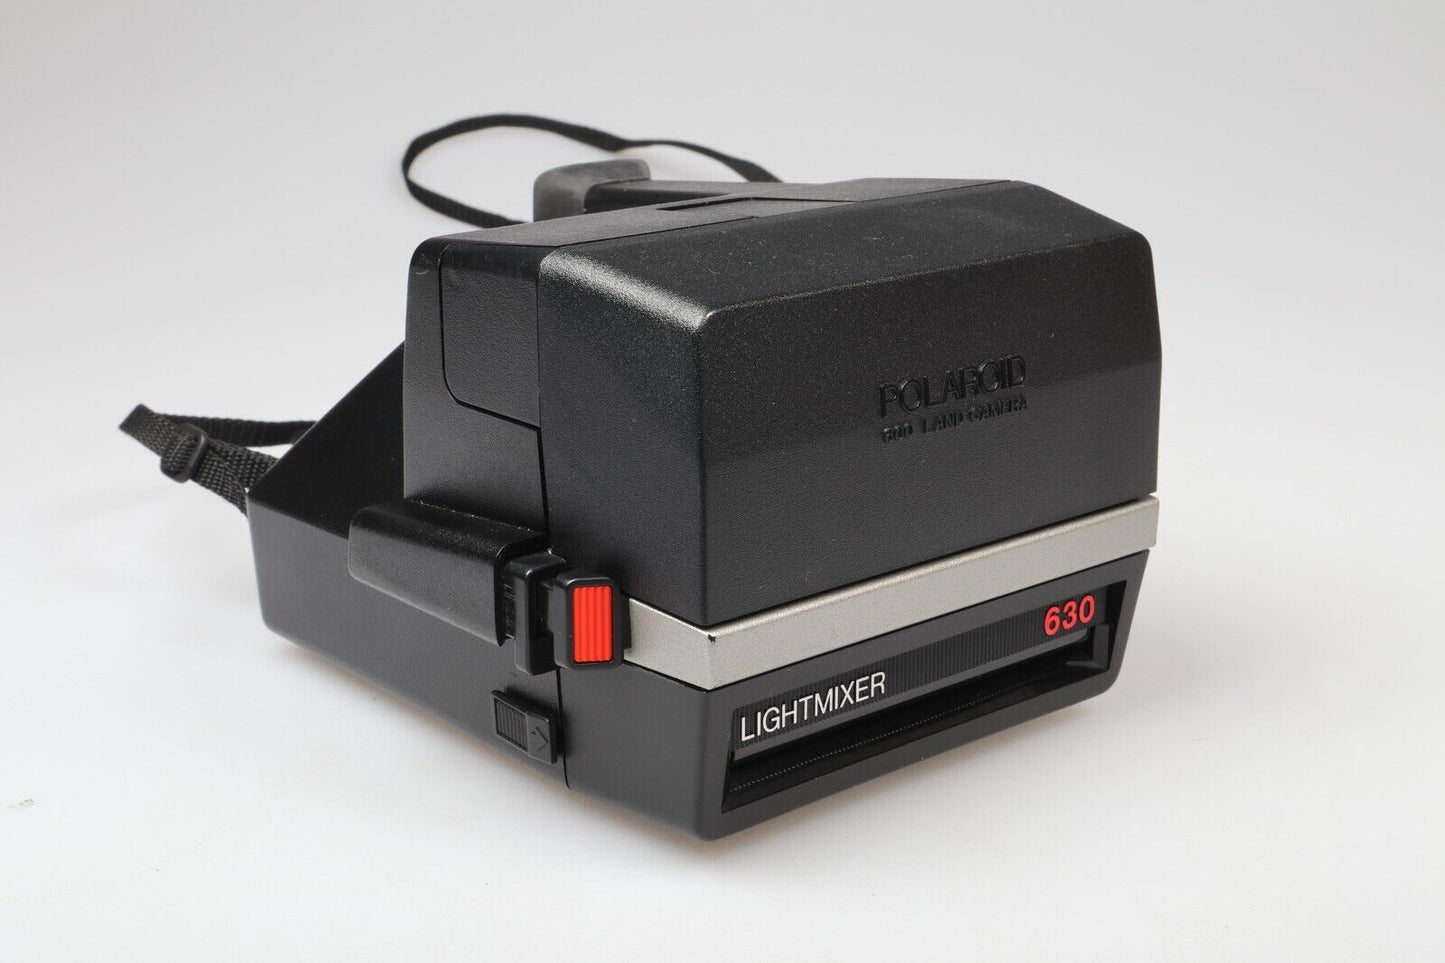 Polaroid LightMixer 630 | Instant Film Camera